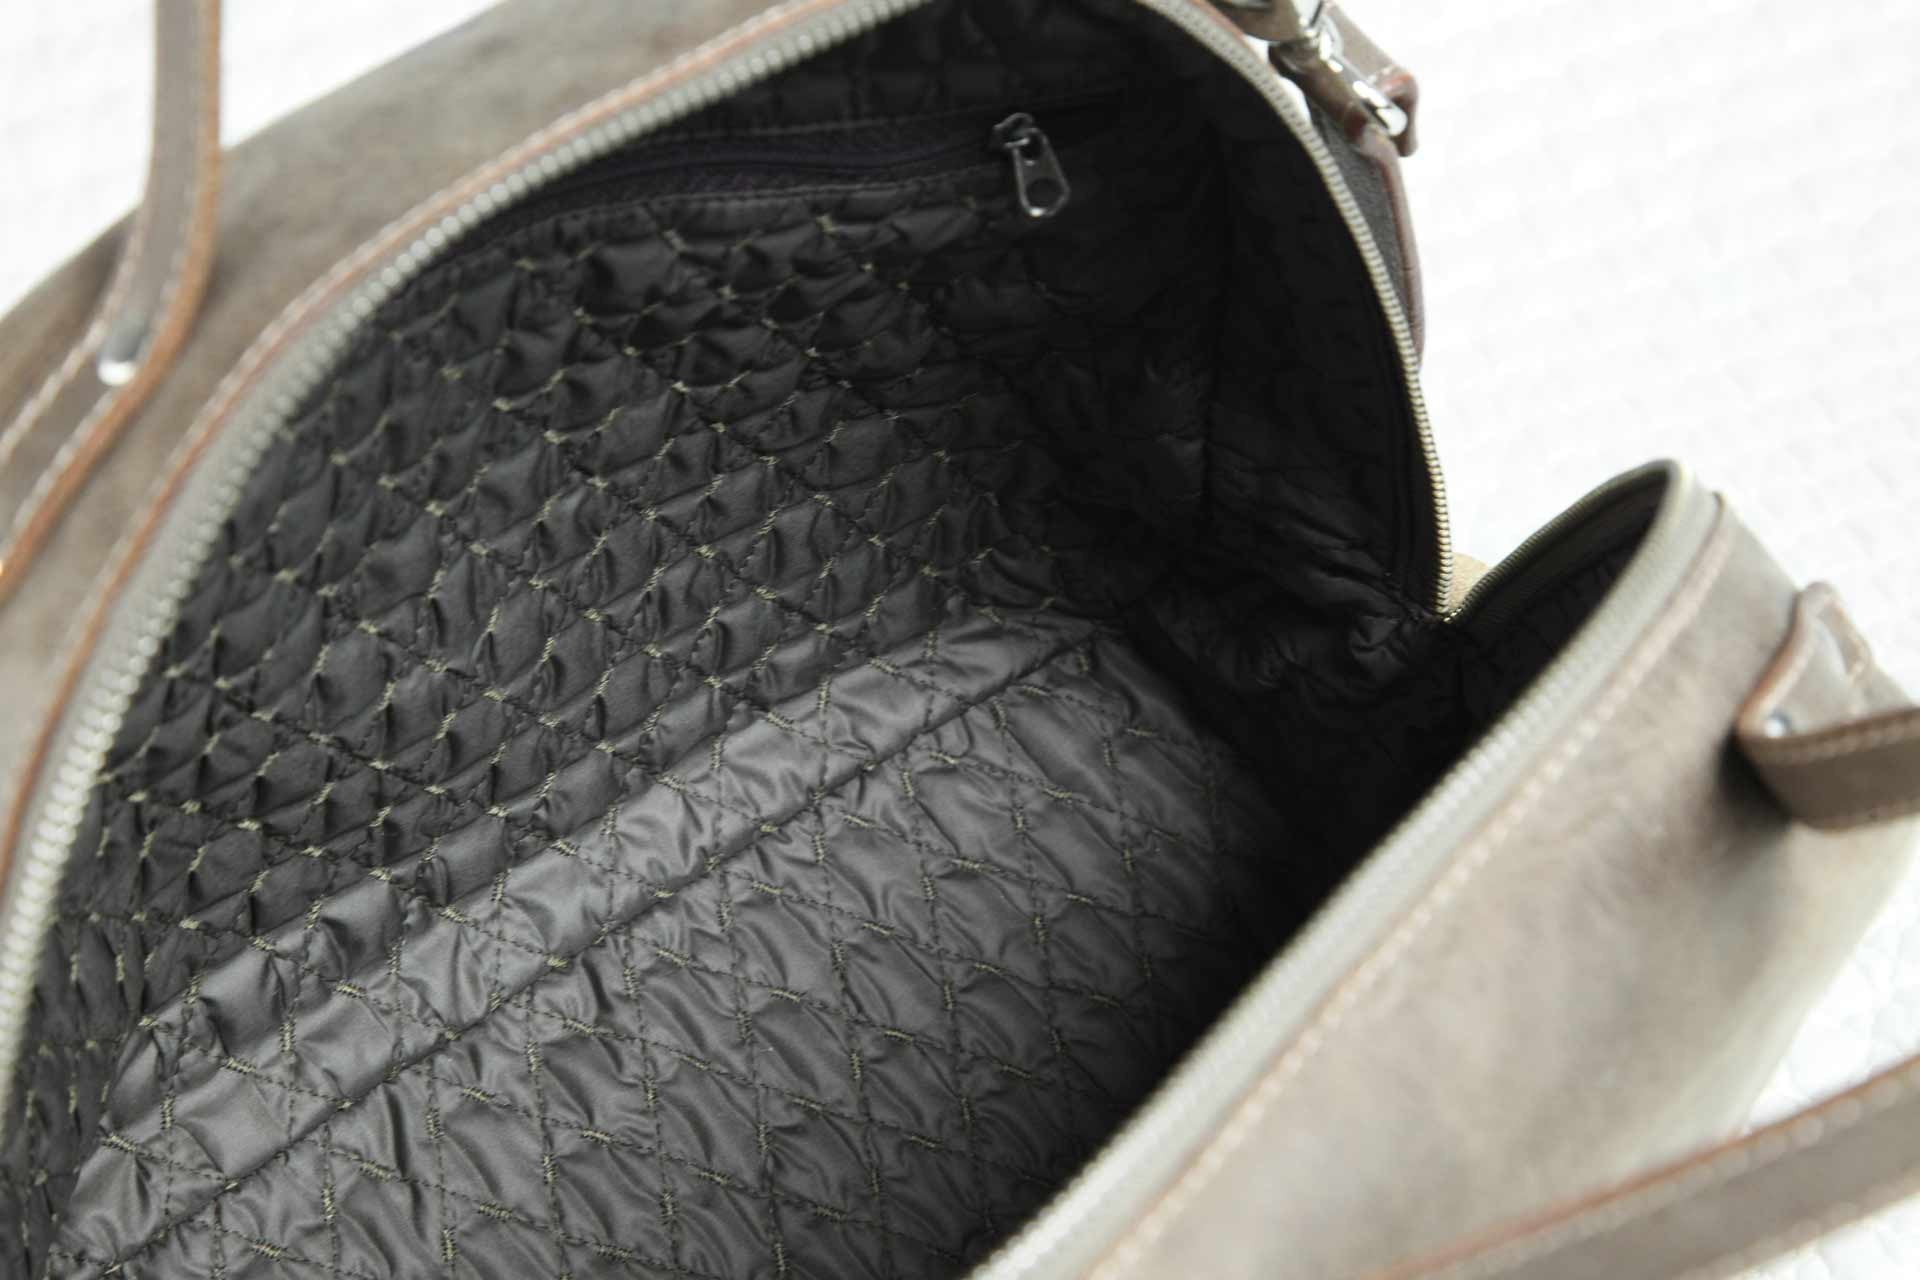 PHILINI BAGS Handbag Vintage Style in Cappuccino - Domi